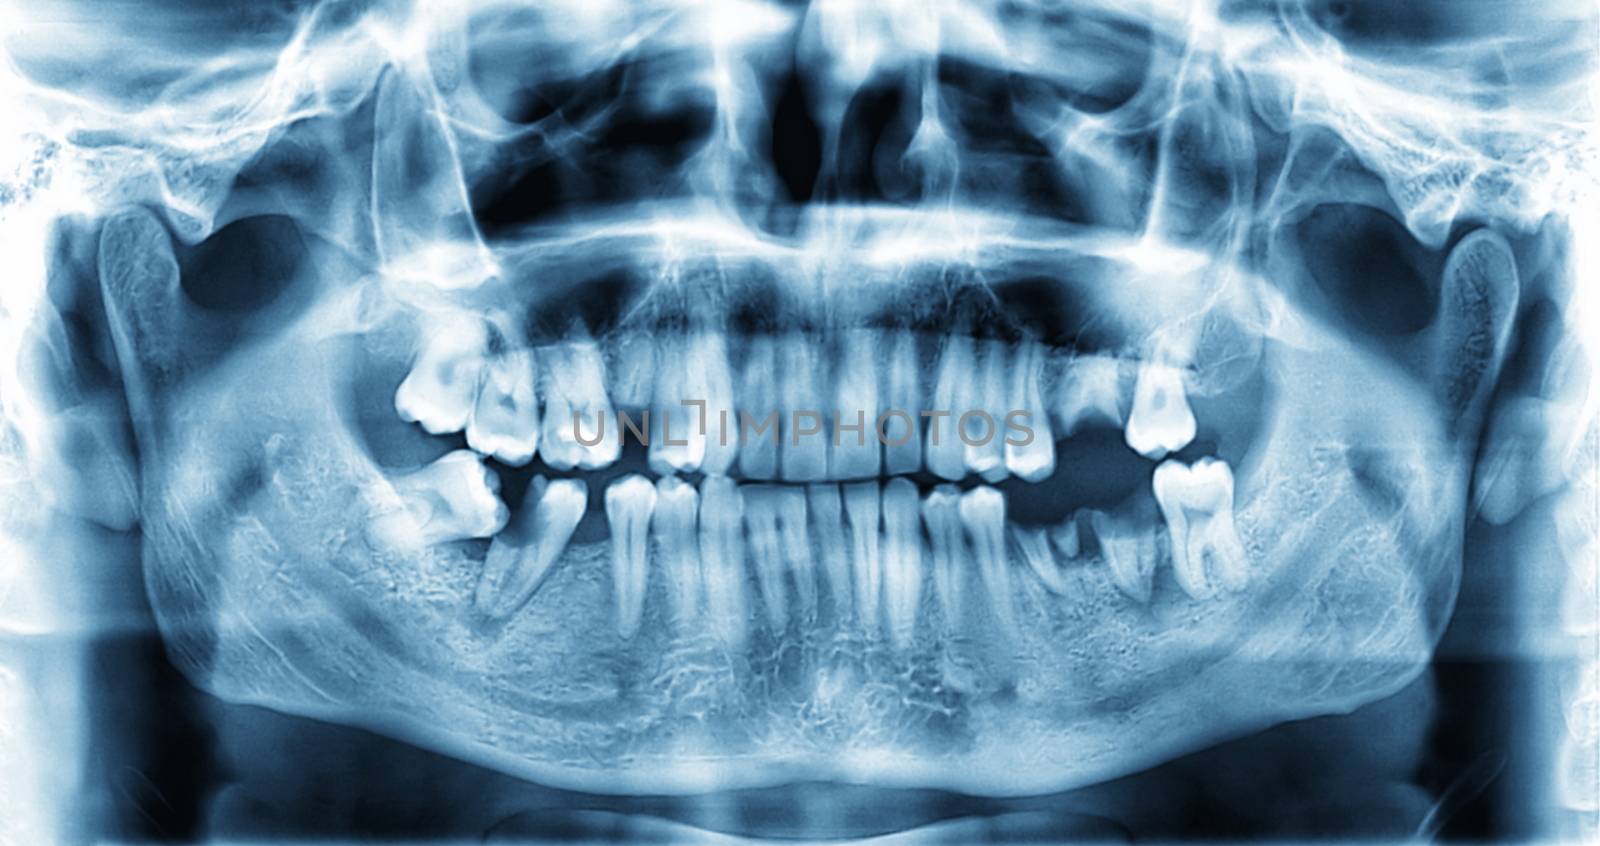 Panoramic dental x-ray image of teeth.